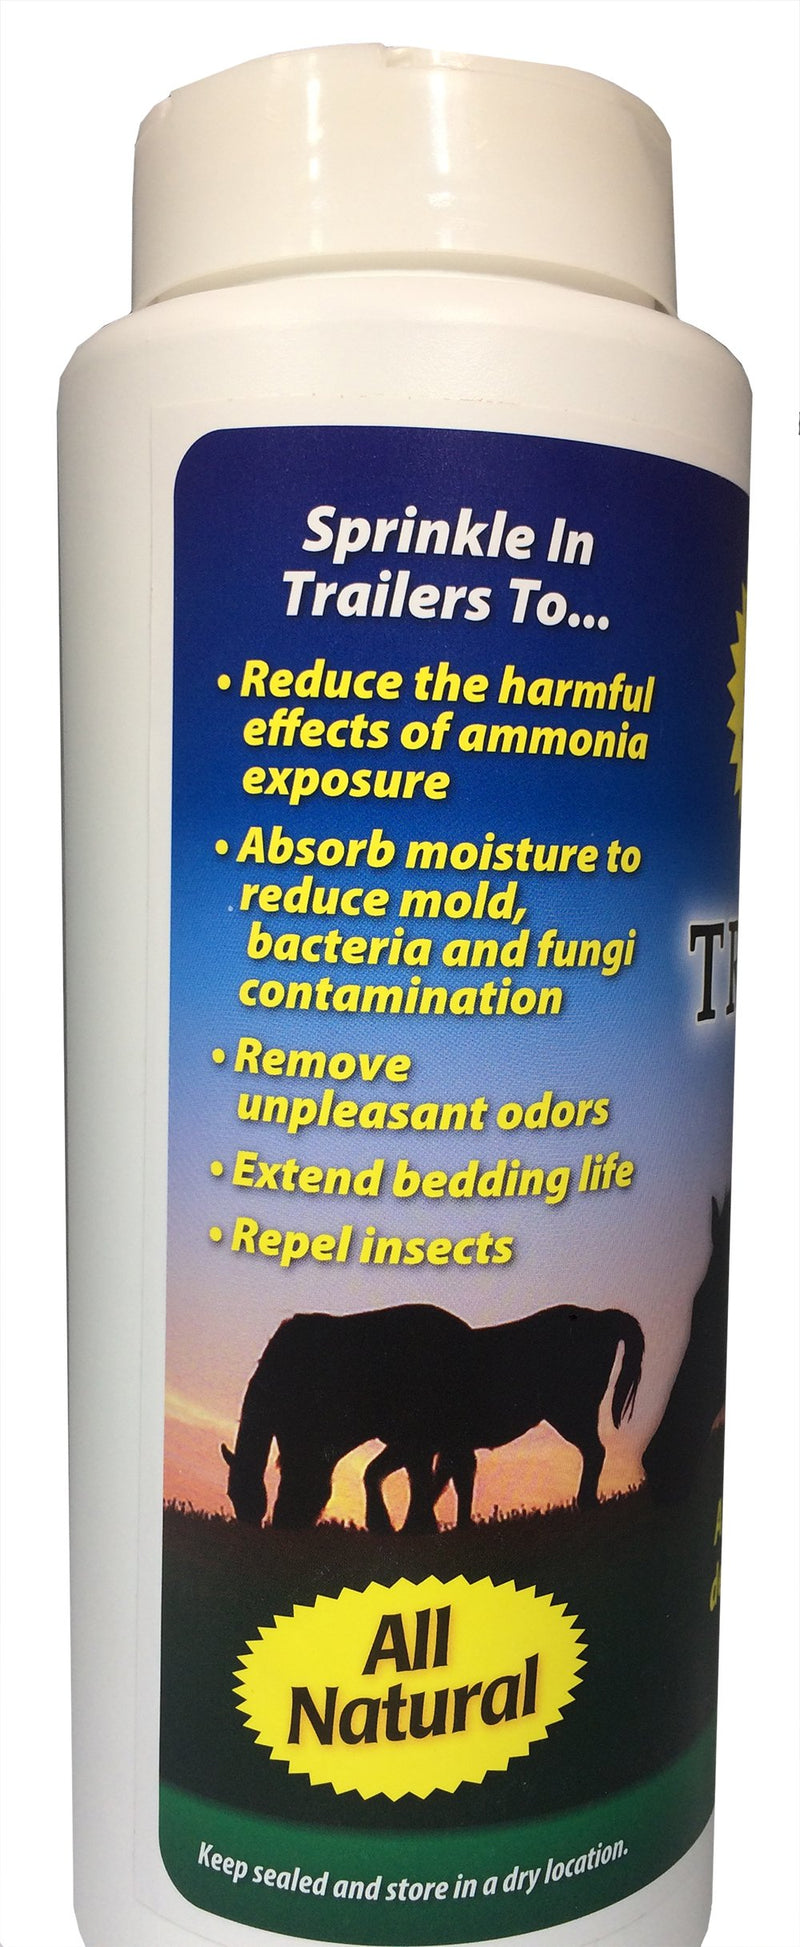 [Australia] - TrailerFresh Moisture Absorbent and Ammonia Neutralizer, 2-Pound Bottle 